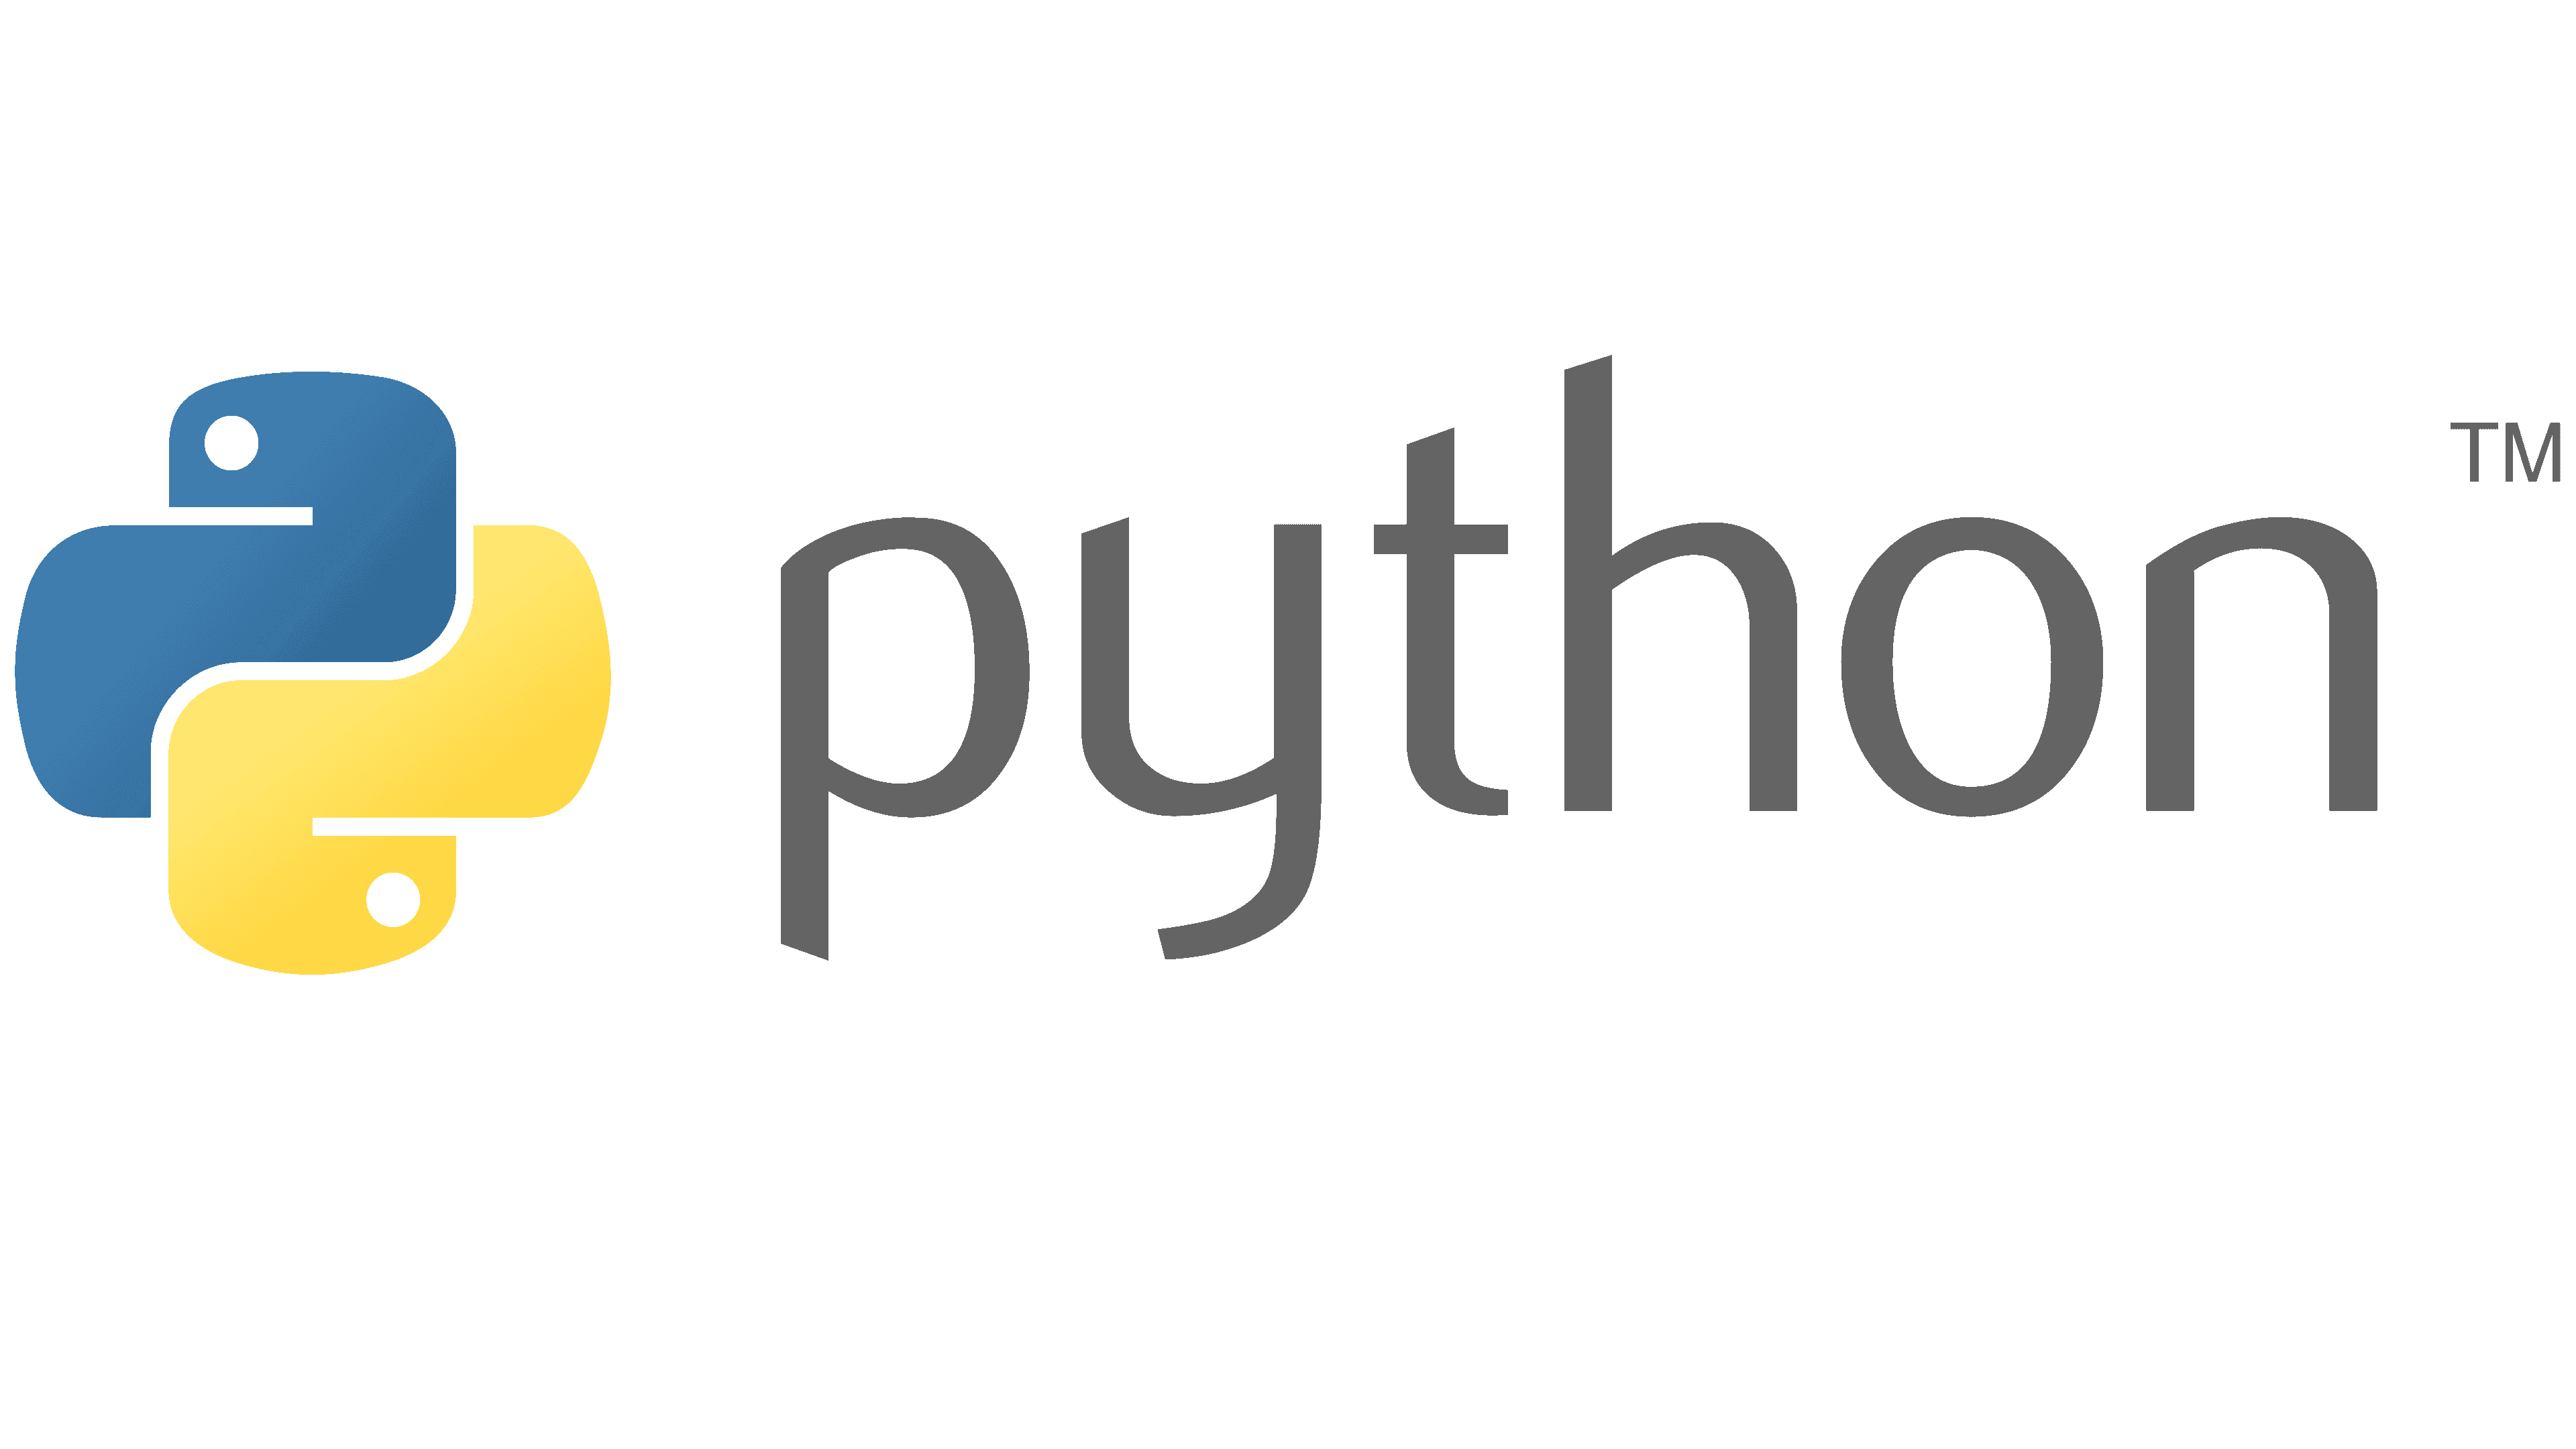 Python | Polaris Automation Technical Competencies